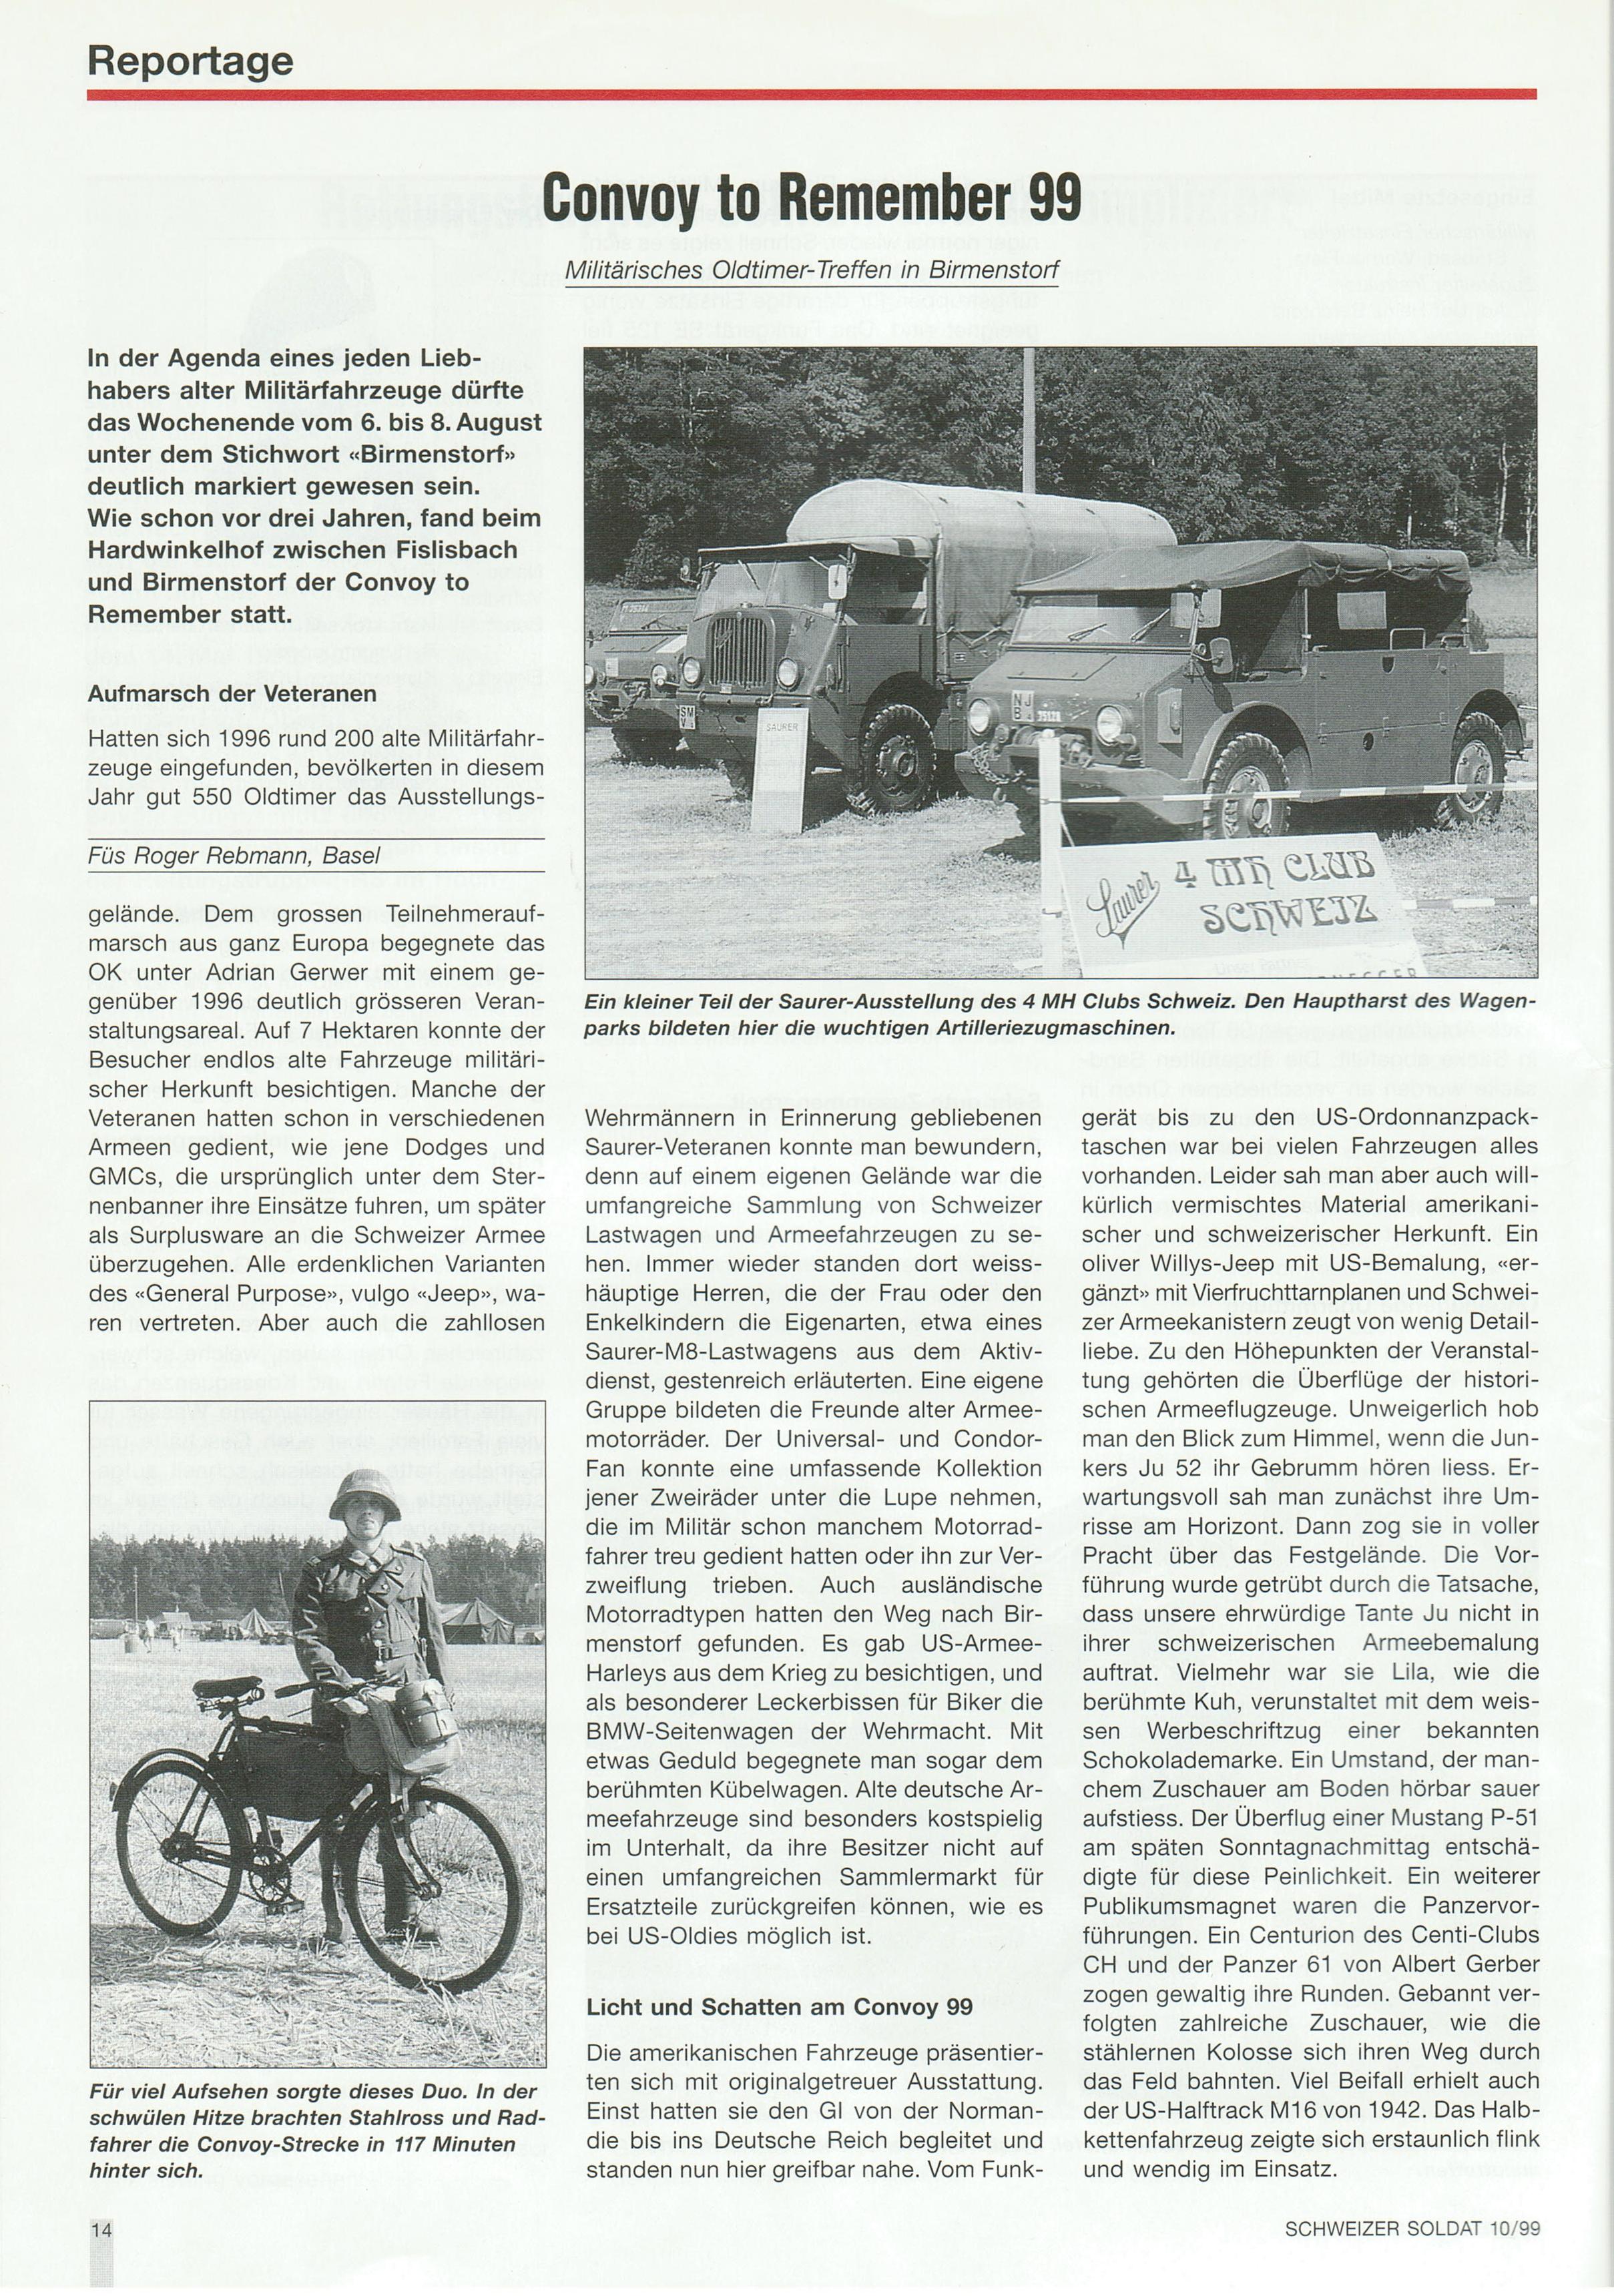 Bericht Schweizer Soldat Oktober 1999